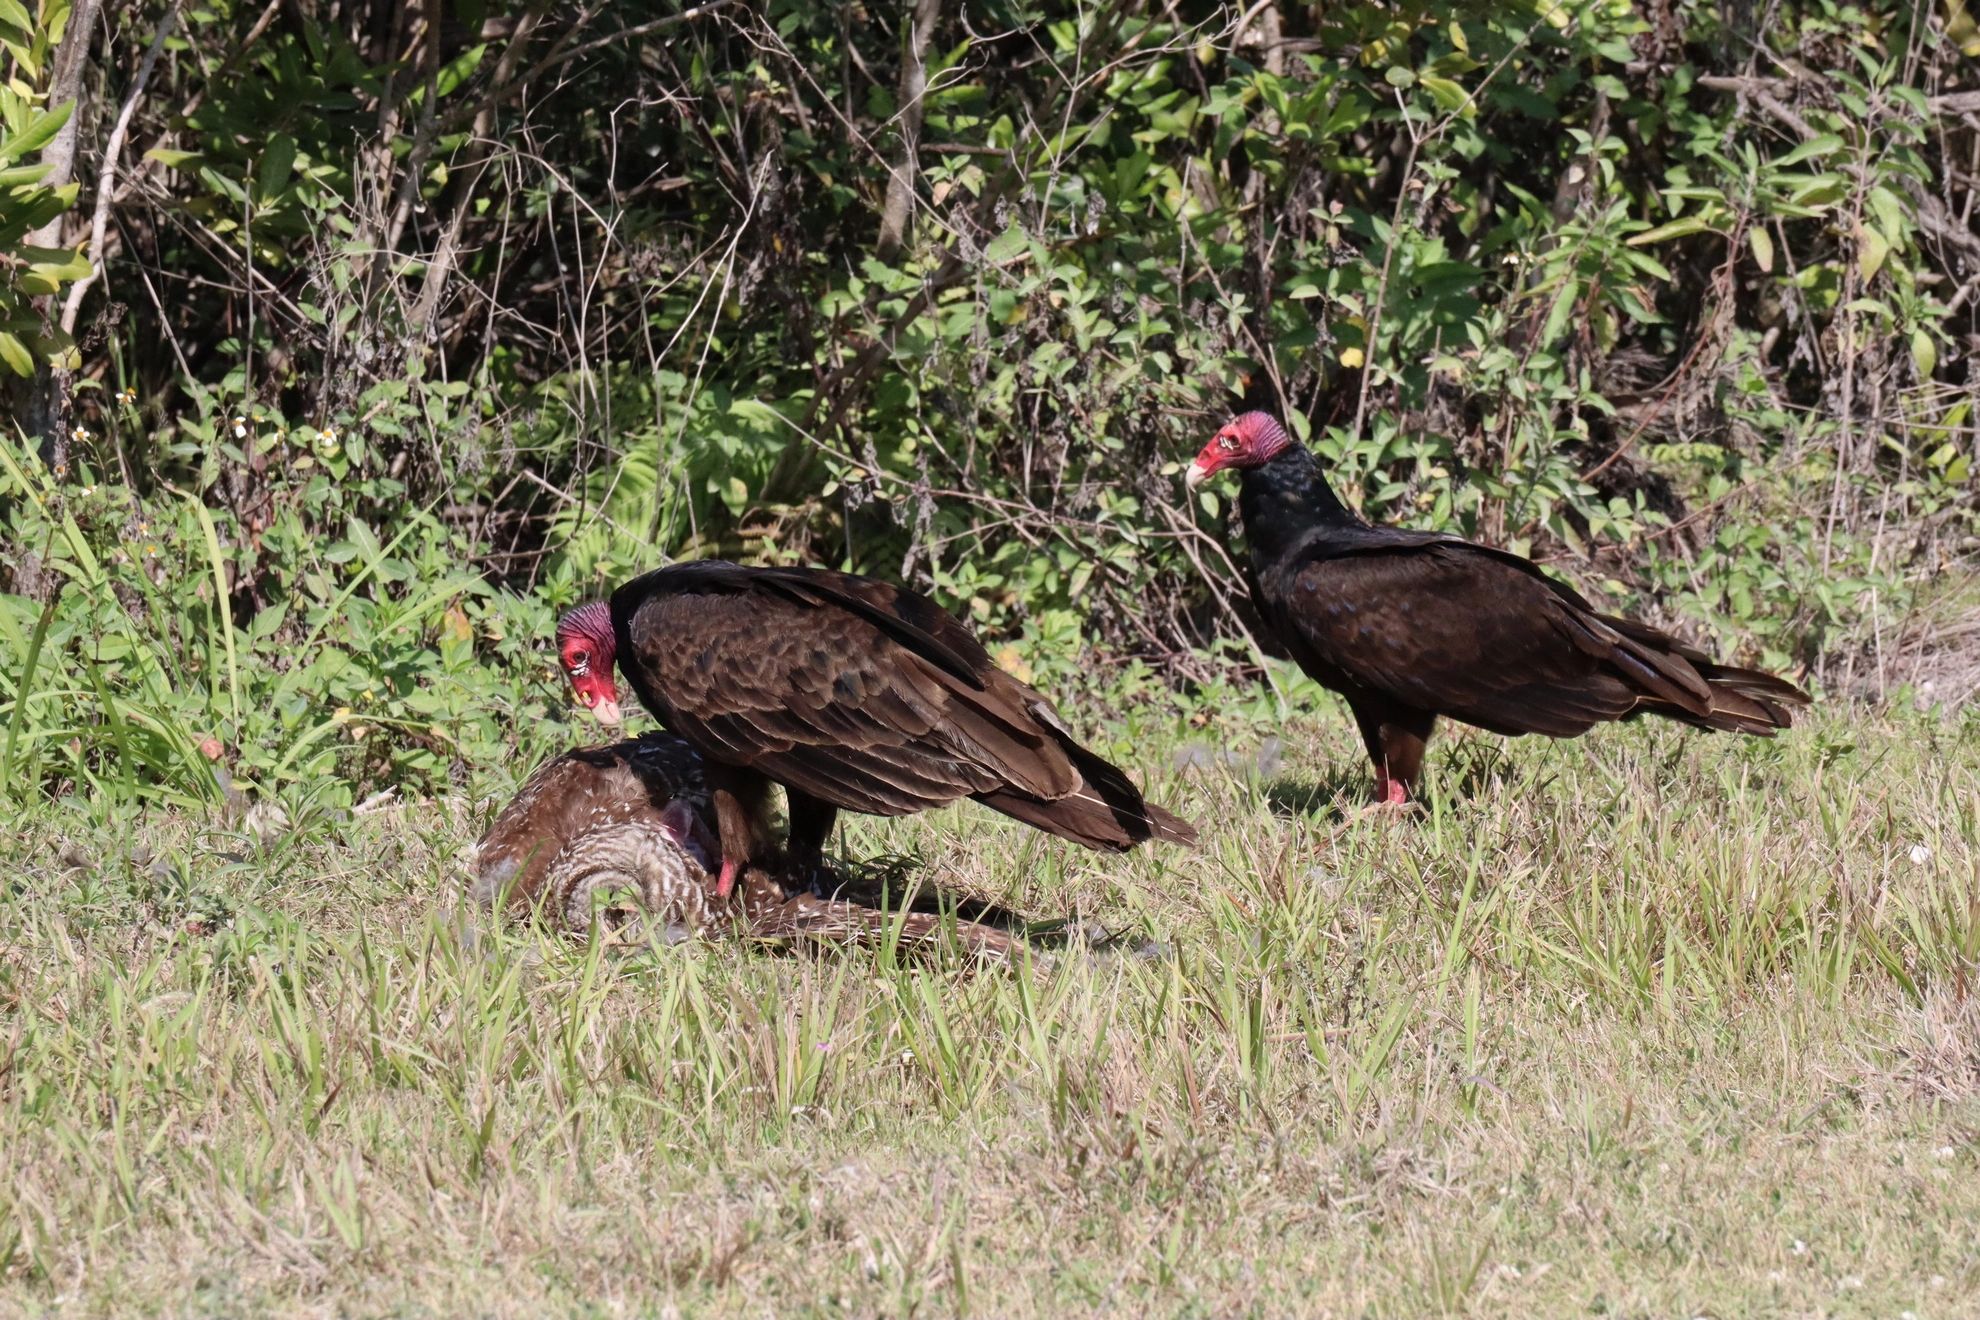 Southwest Florida Wildlife Photos - Turkey Vultures Eating a Barred Owl, Turner River Road